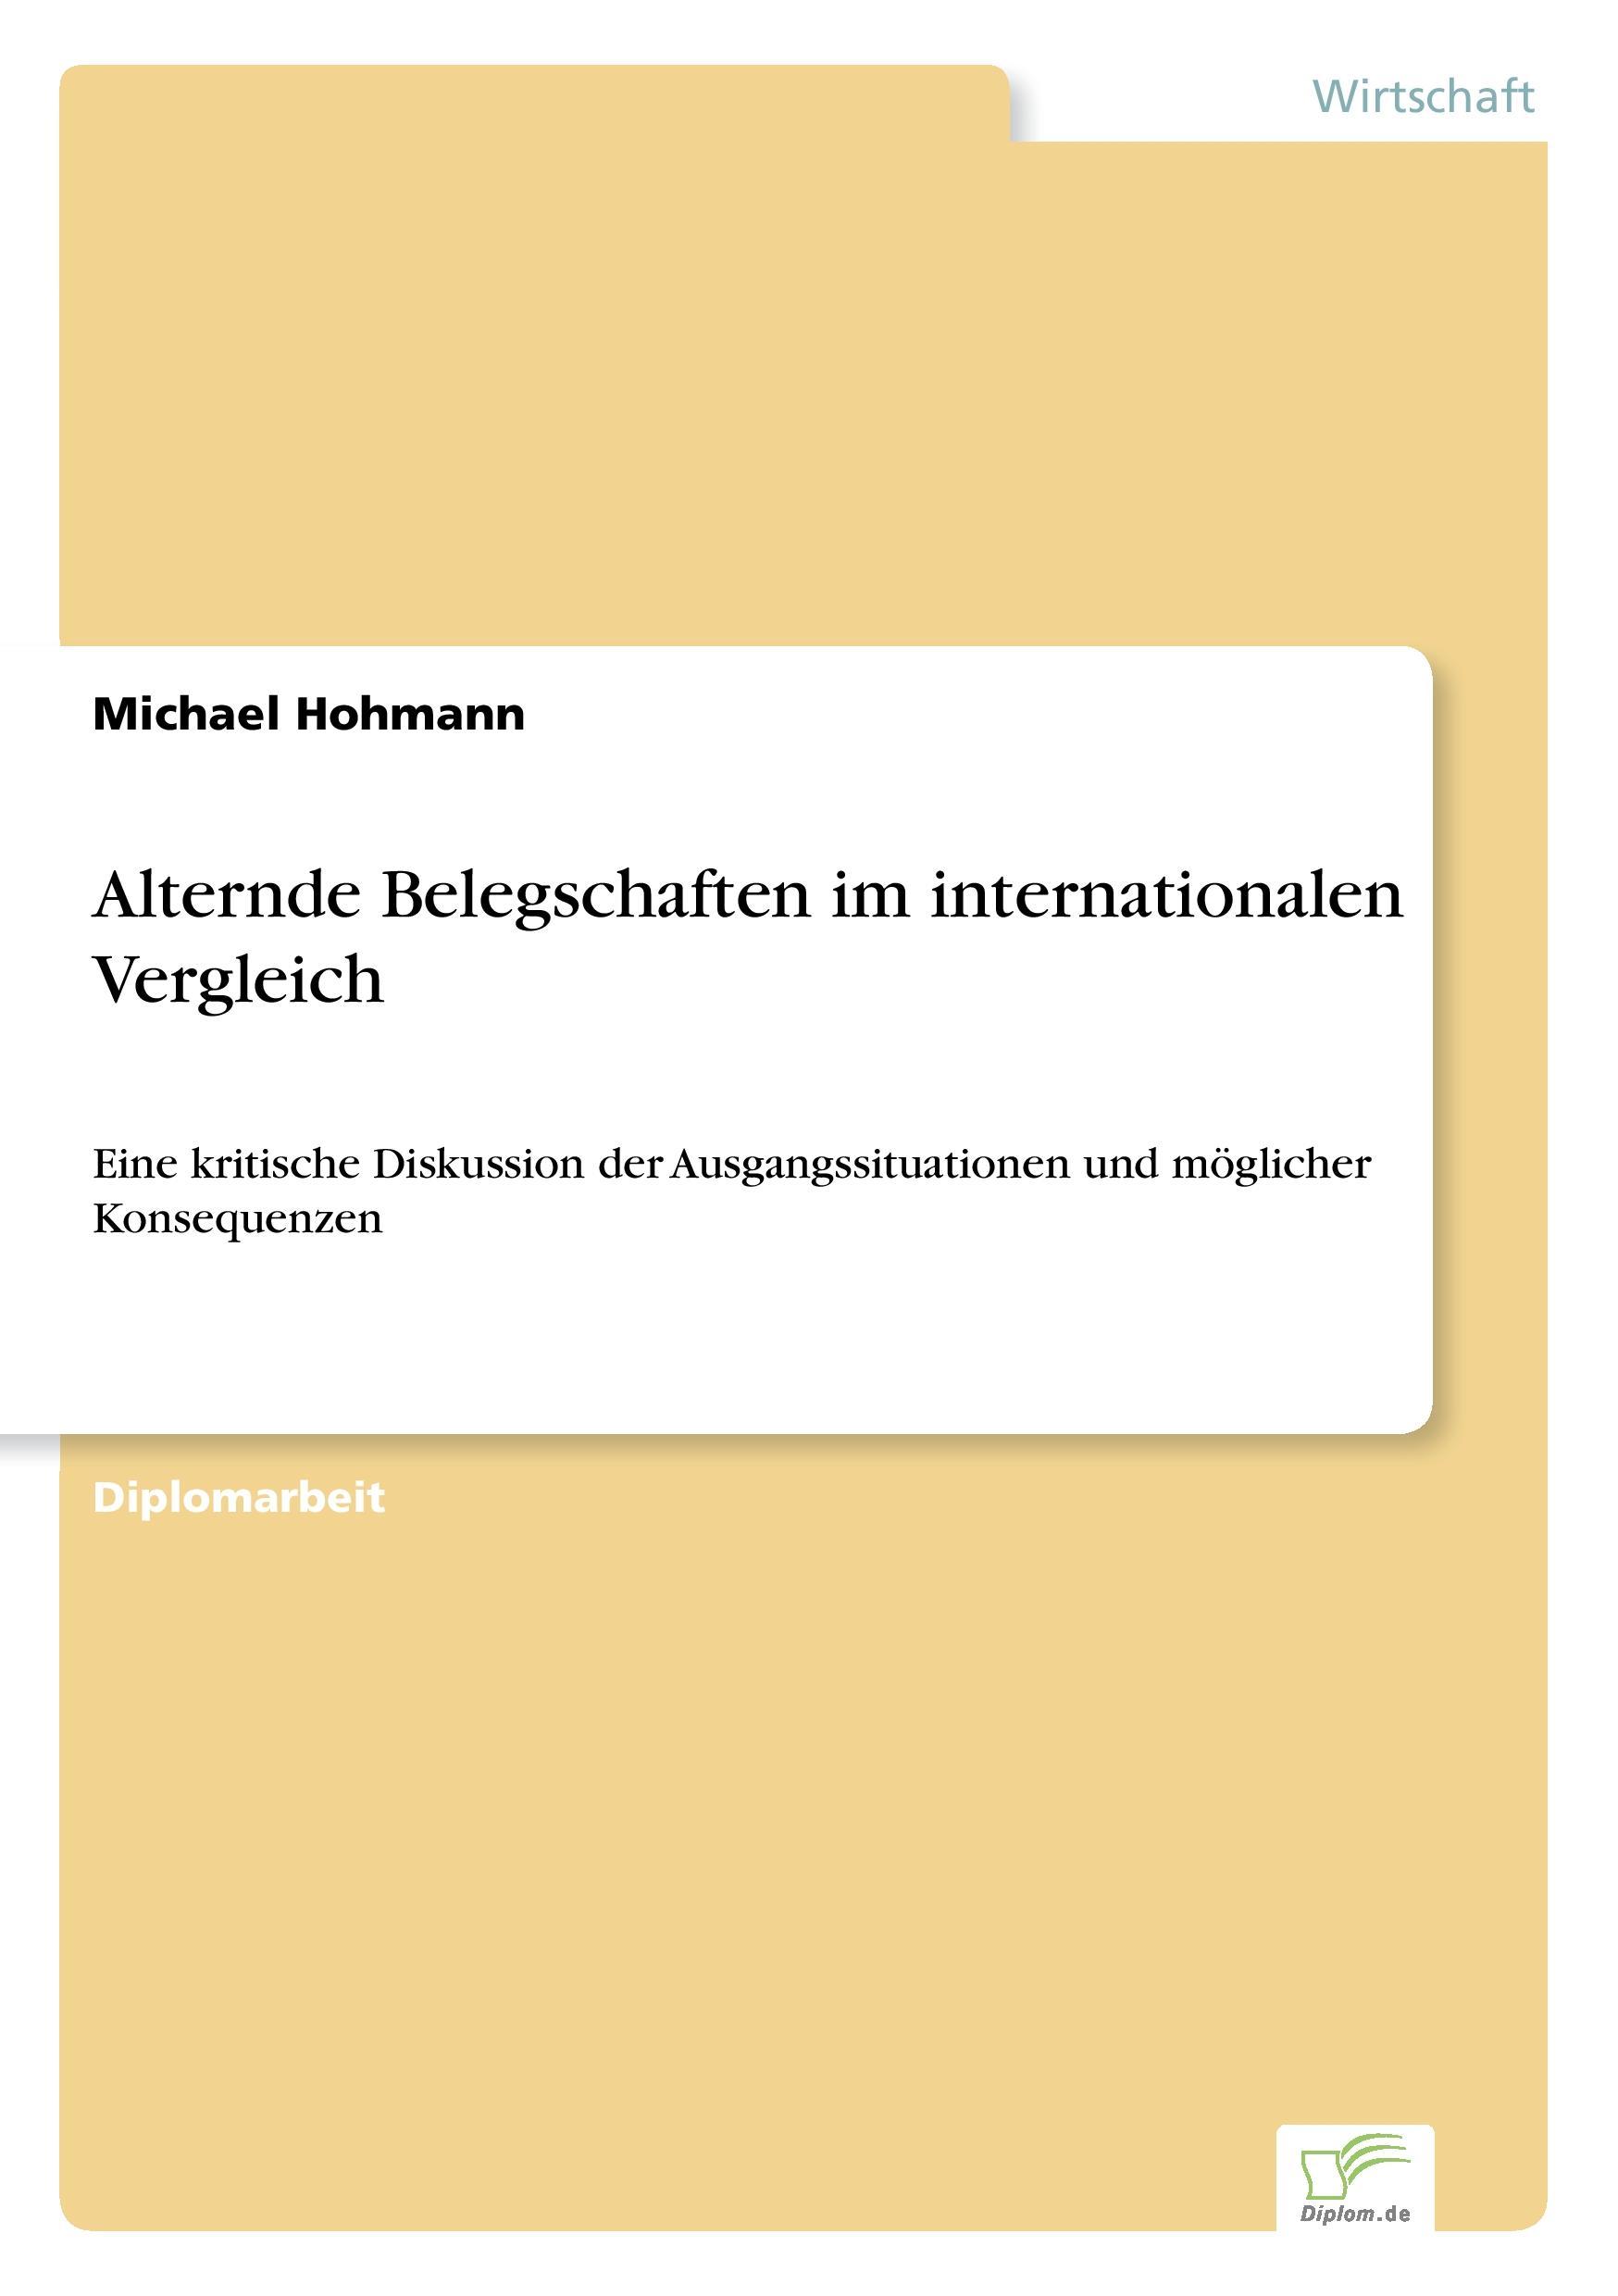 Alternde Belegschaften im internationalen Vergleich - Hohmann, Michael